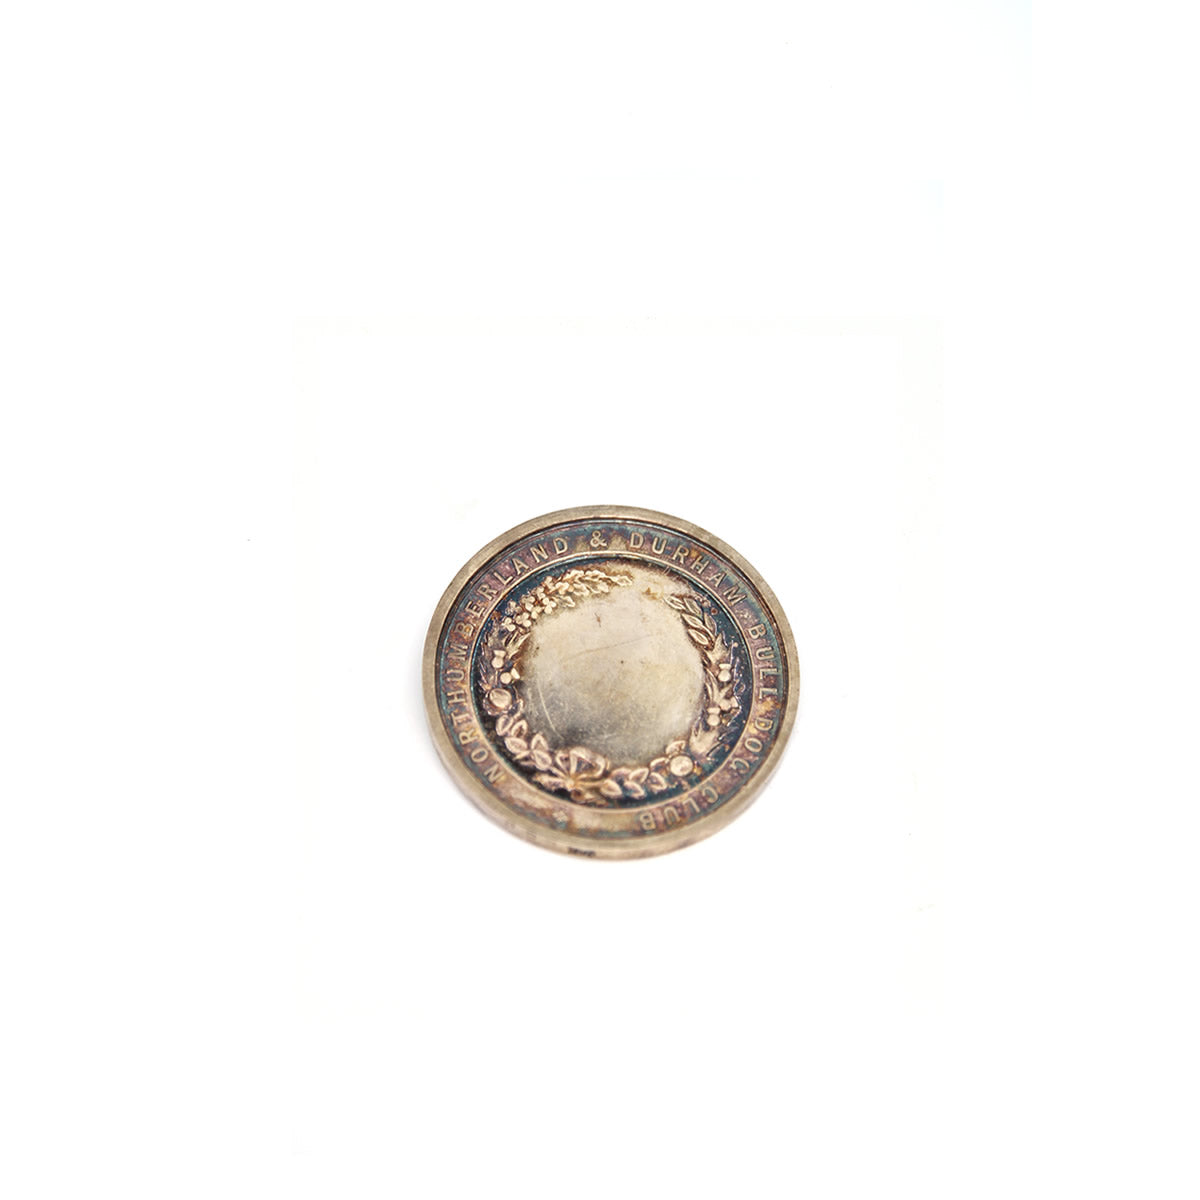 Northumberland Bulldog Club Medal (Silver Tone/No Box), c.1920's